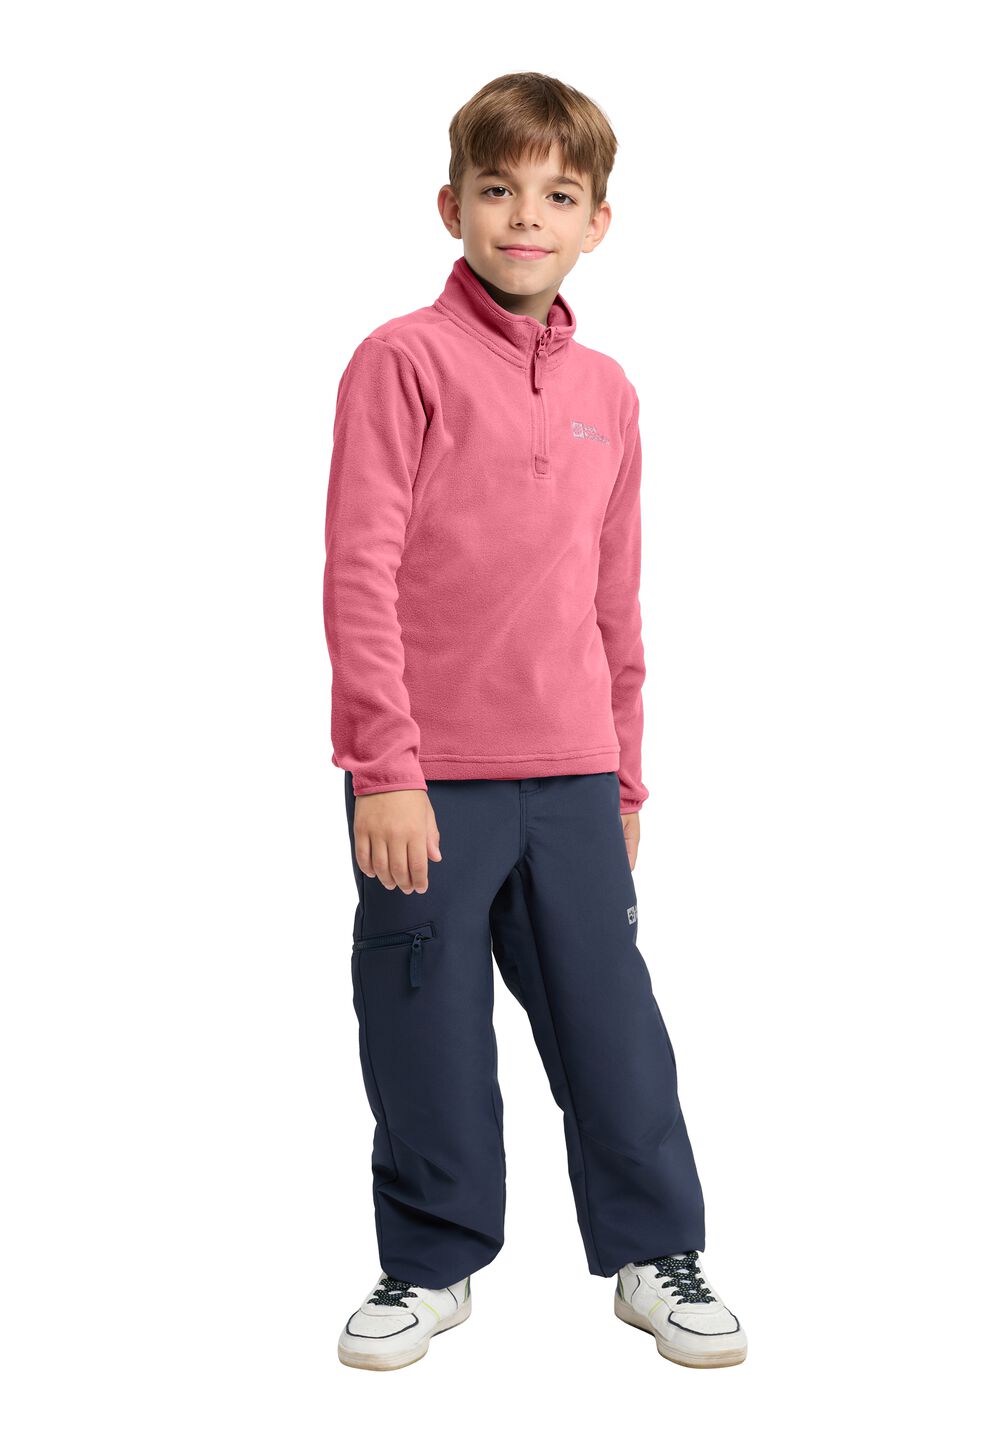 Jack Wolfskin Fleecepullover Kinder Taunus Halfzip Kids 164 soft pink soft pink von Jack Wolfskin